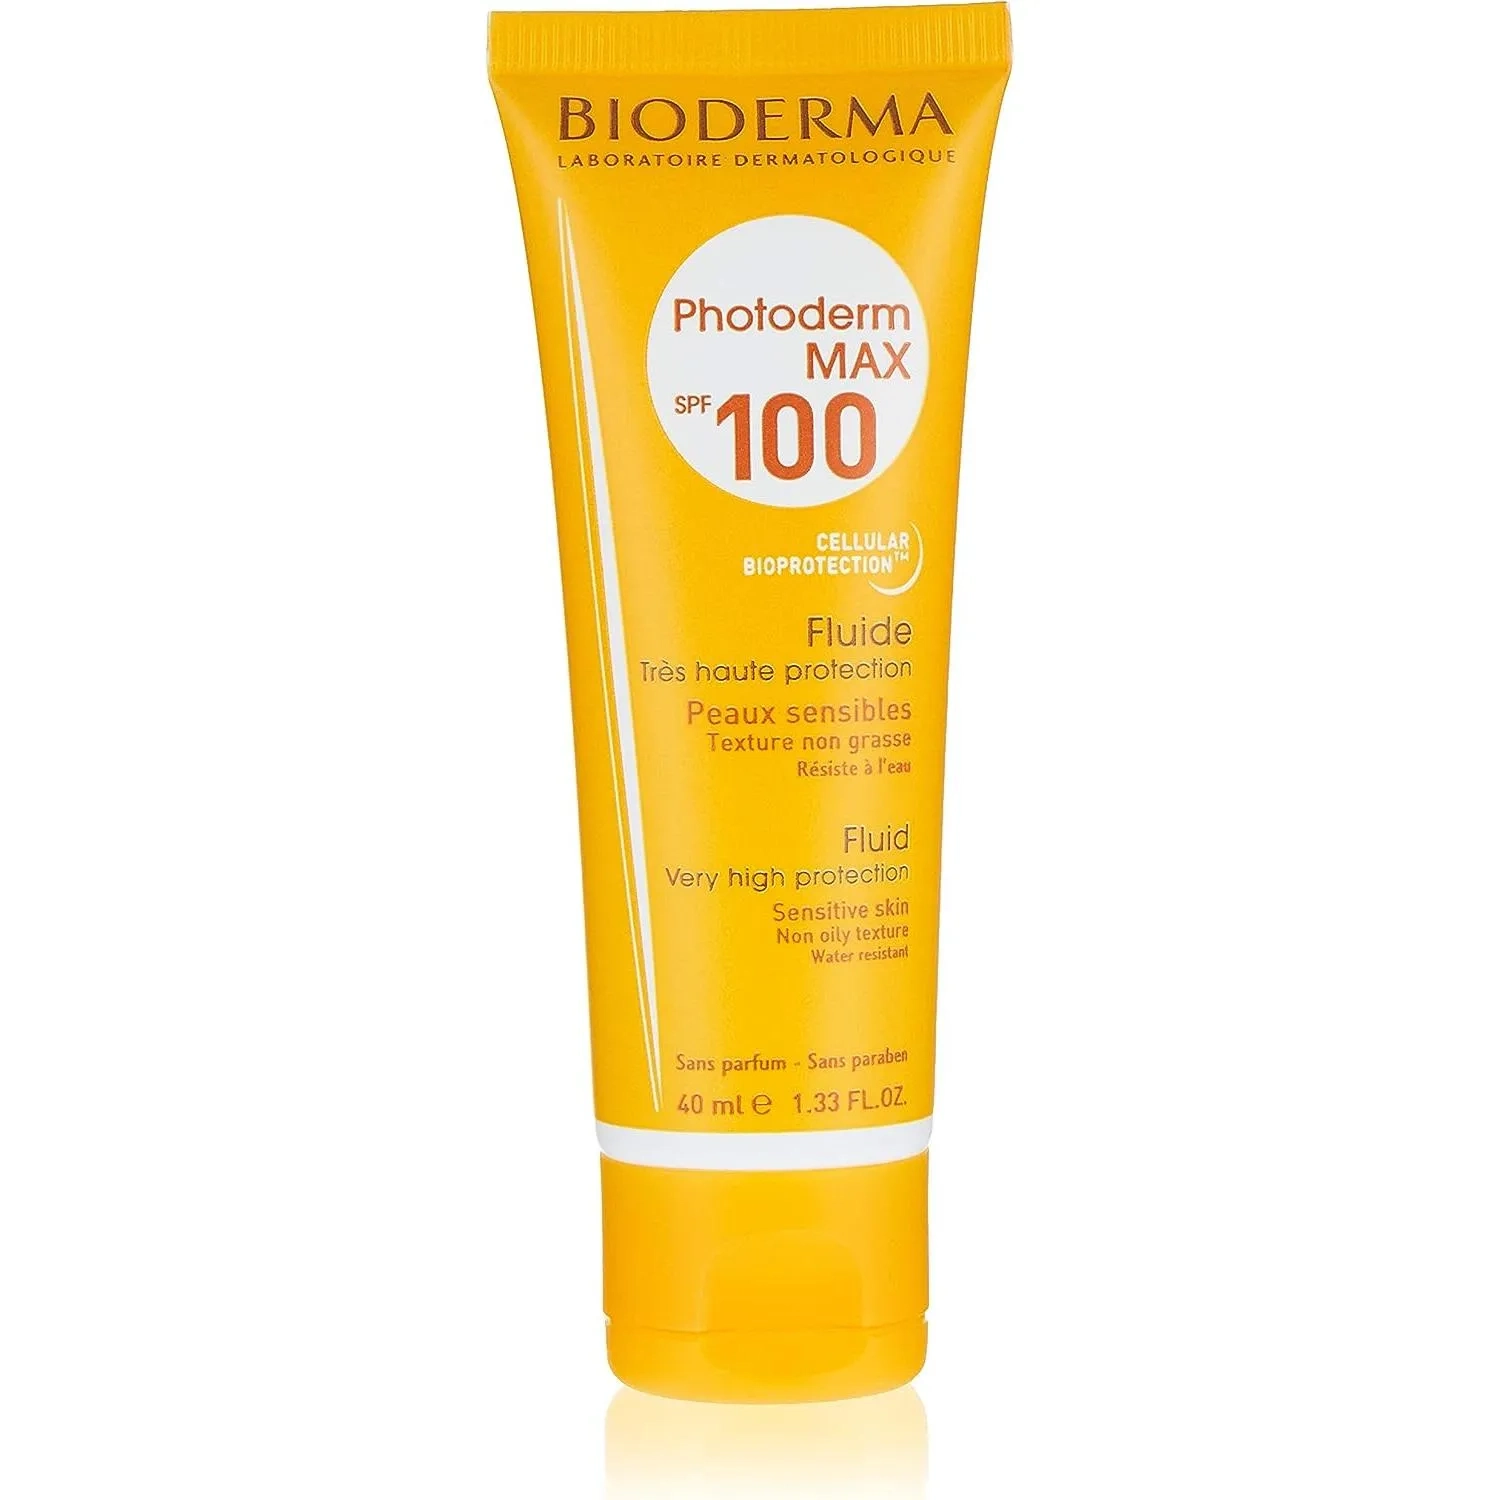 Bioderma Photoderm Face & Body Sunscreen SPF 100 Max Fluid, 40 ml